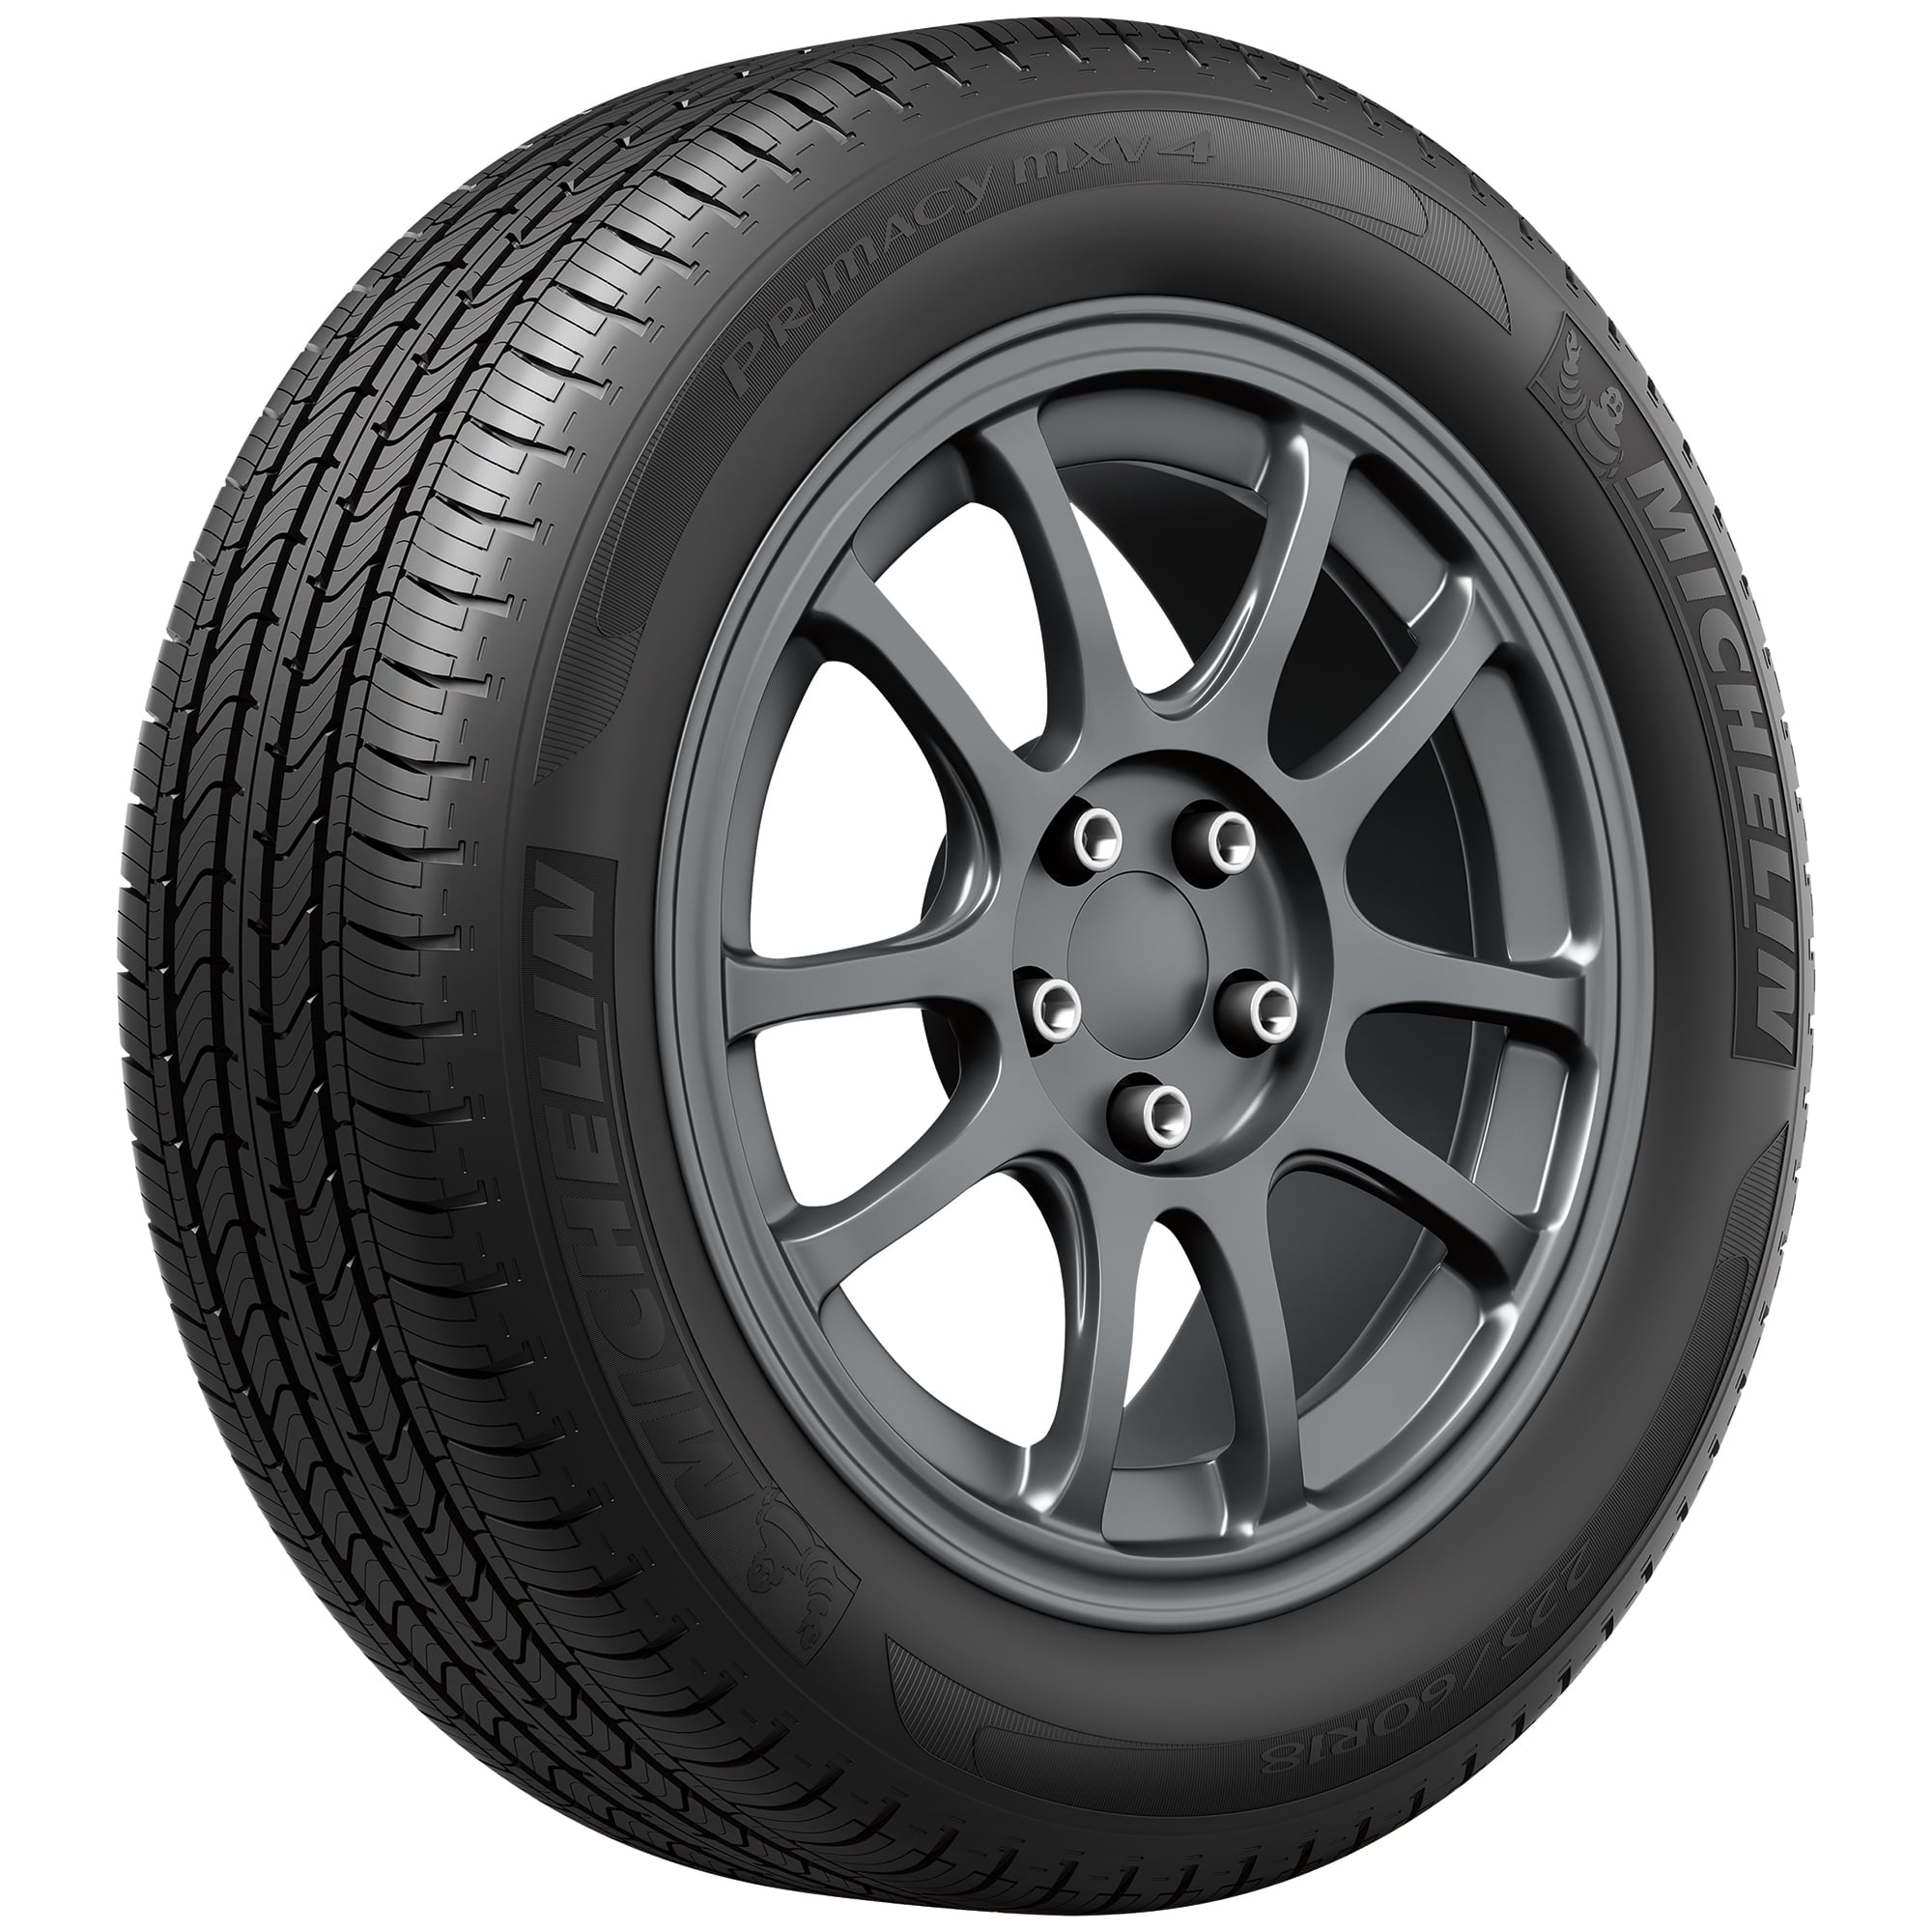 Michelin Primacy MXV4 All-Season Highway Tire 205/65R16 95H 